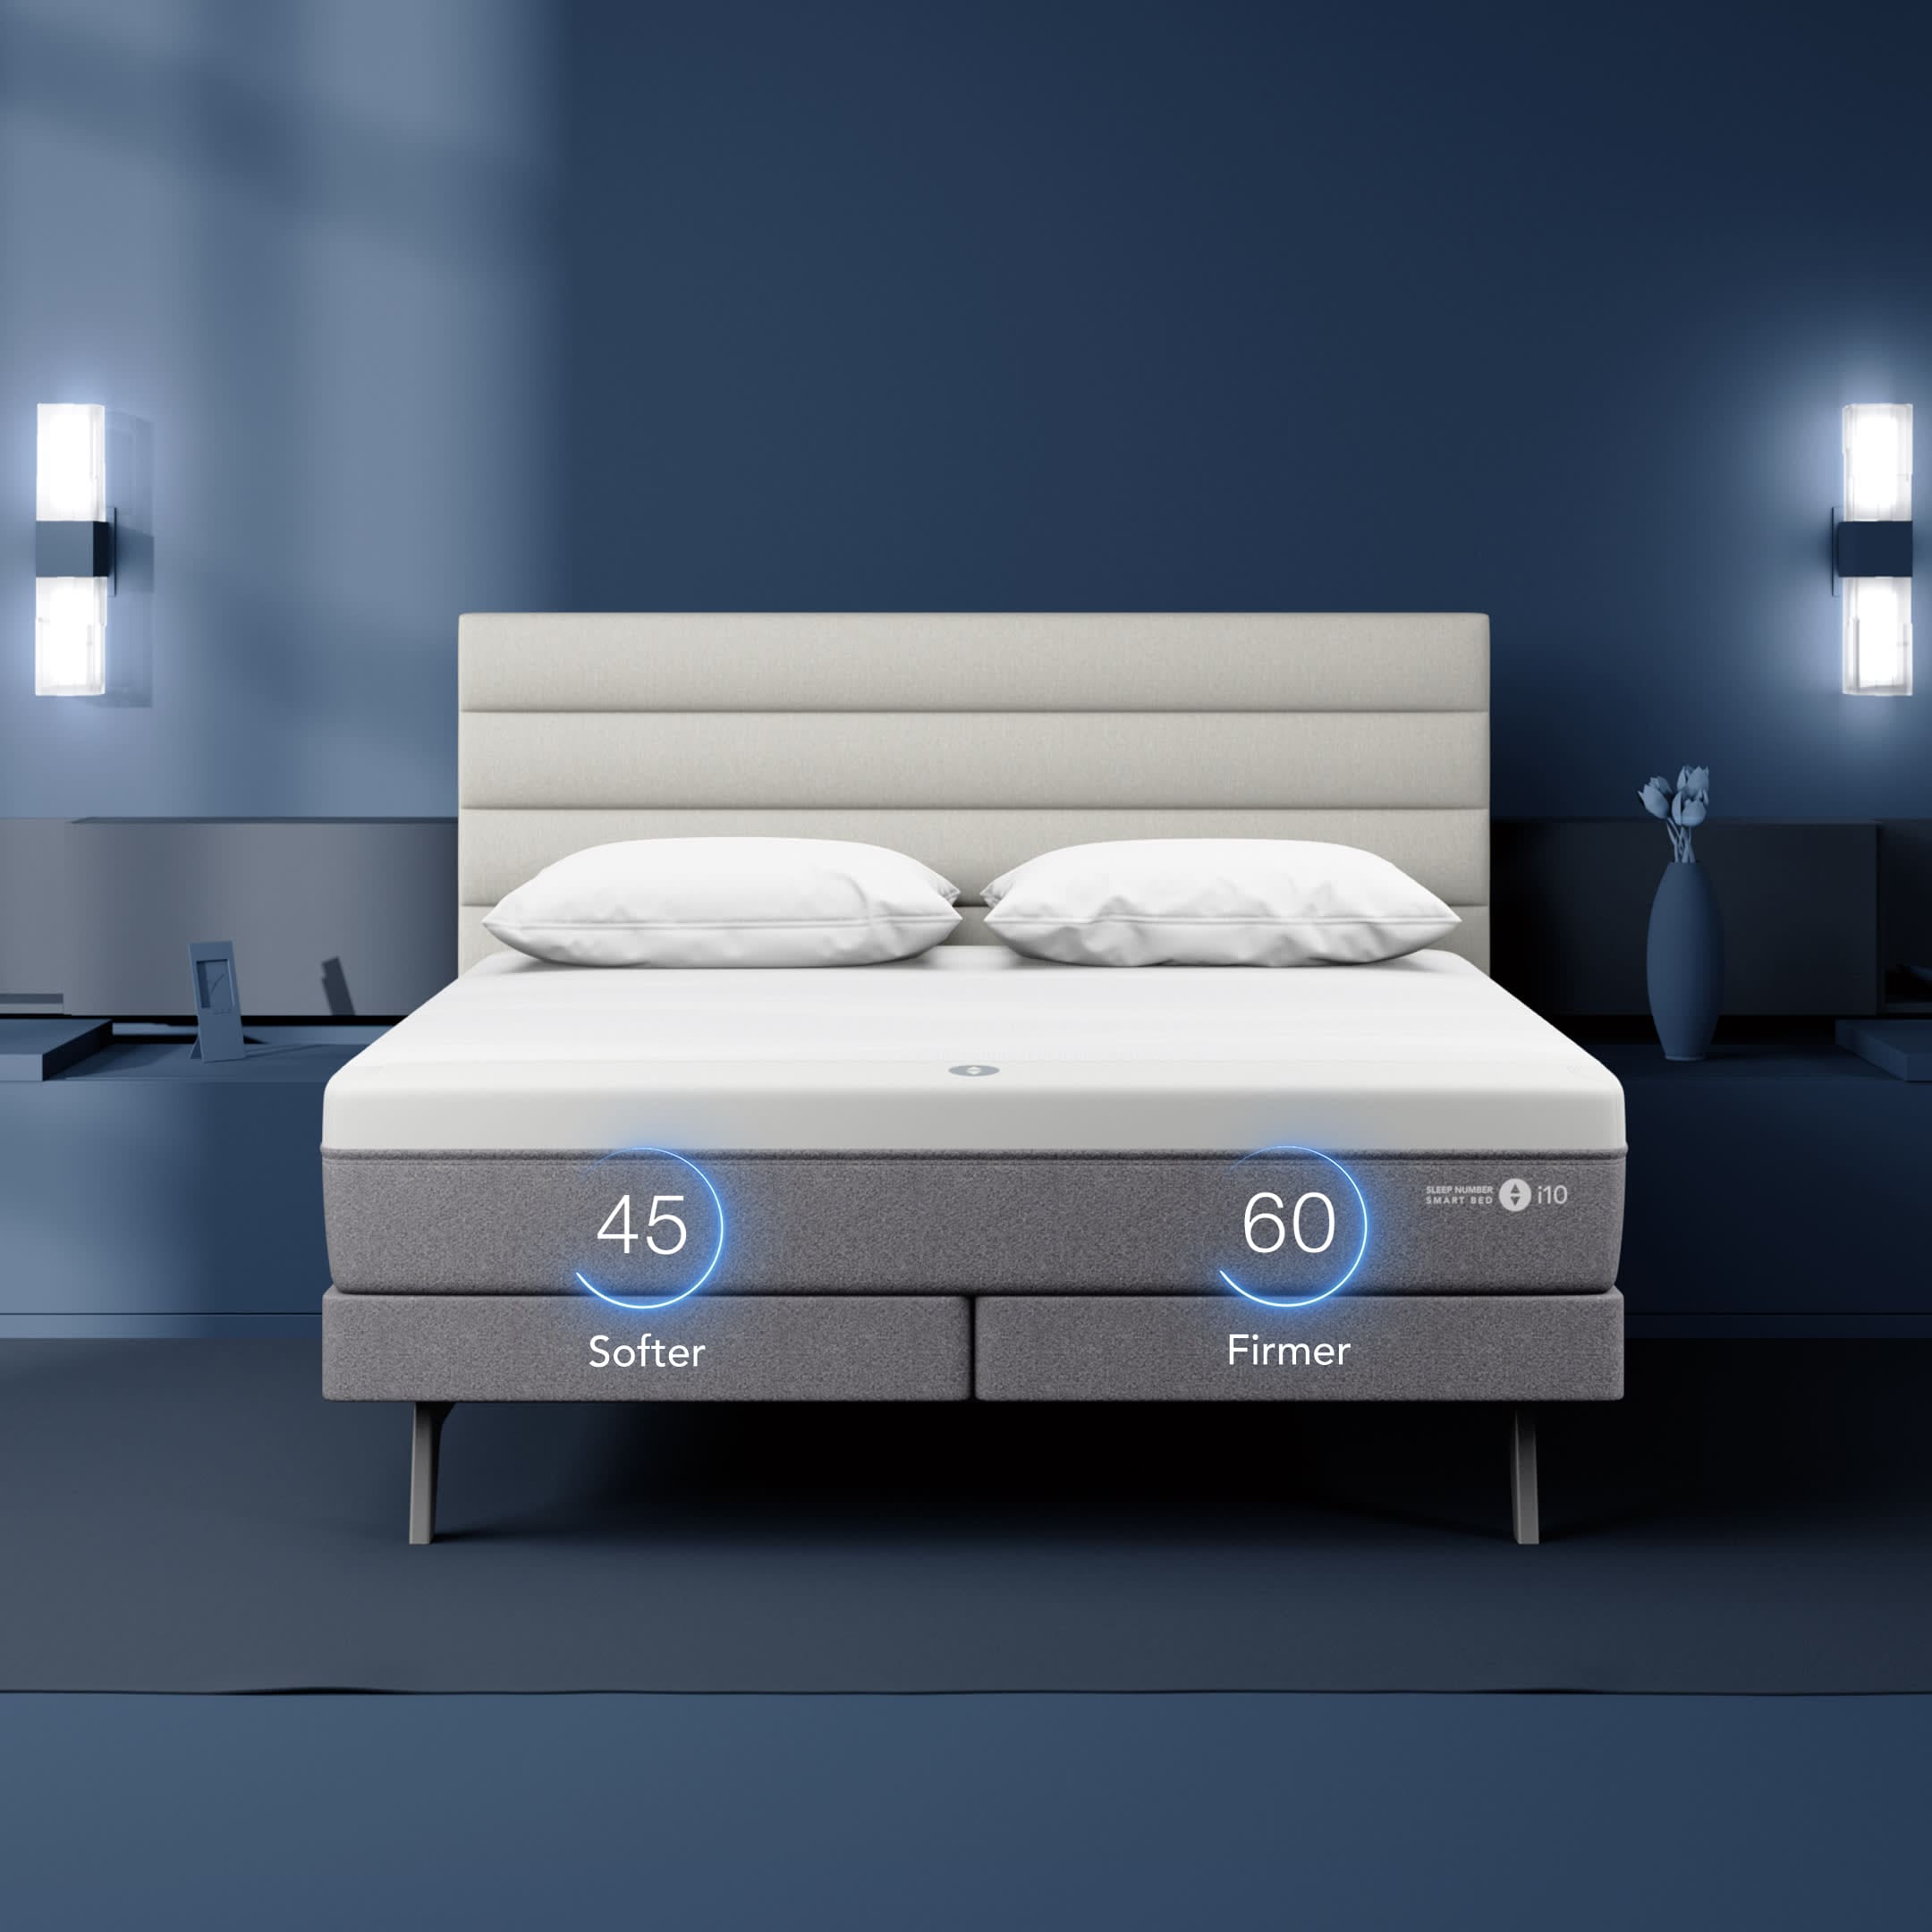 Sleep Number i10 Smart Bed - Split California King Mattress Adjustable Firmness